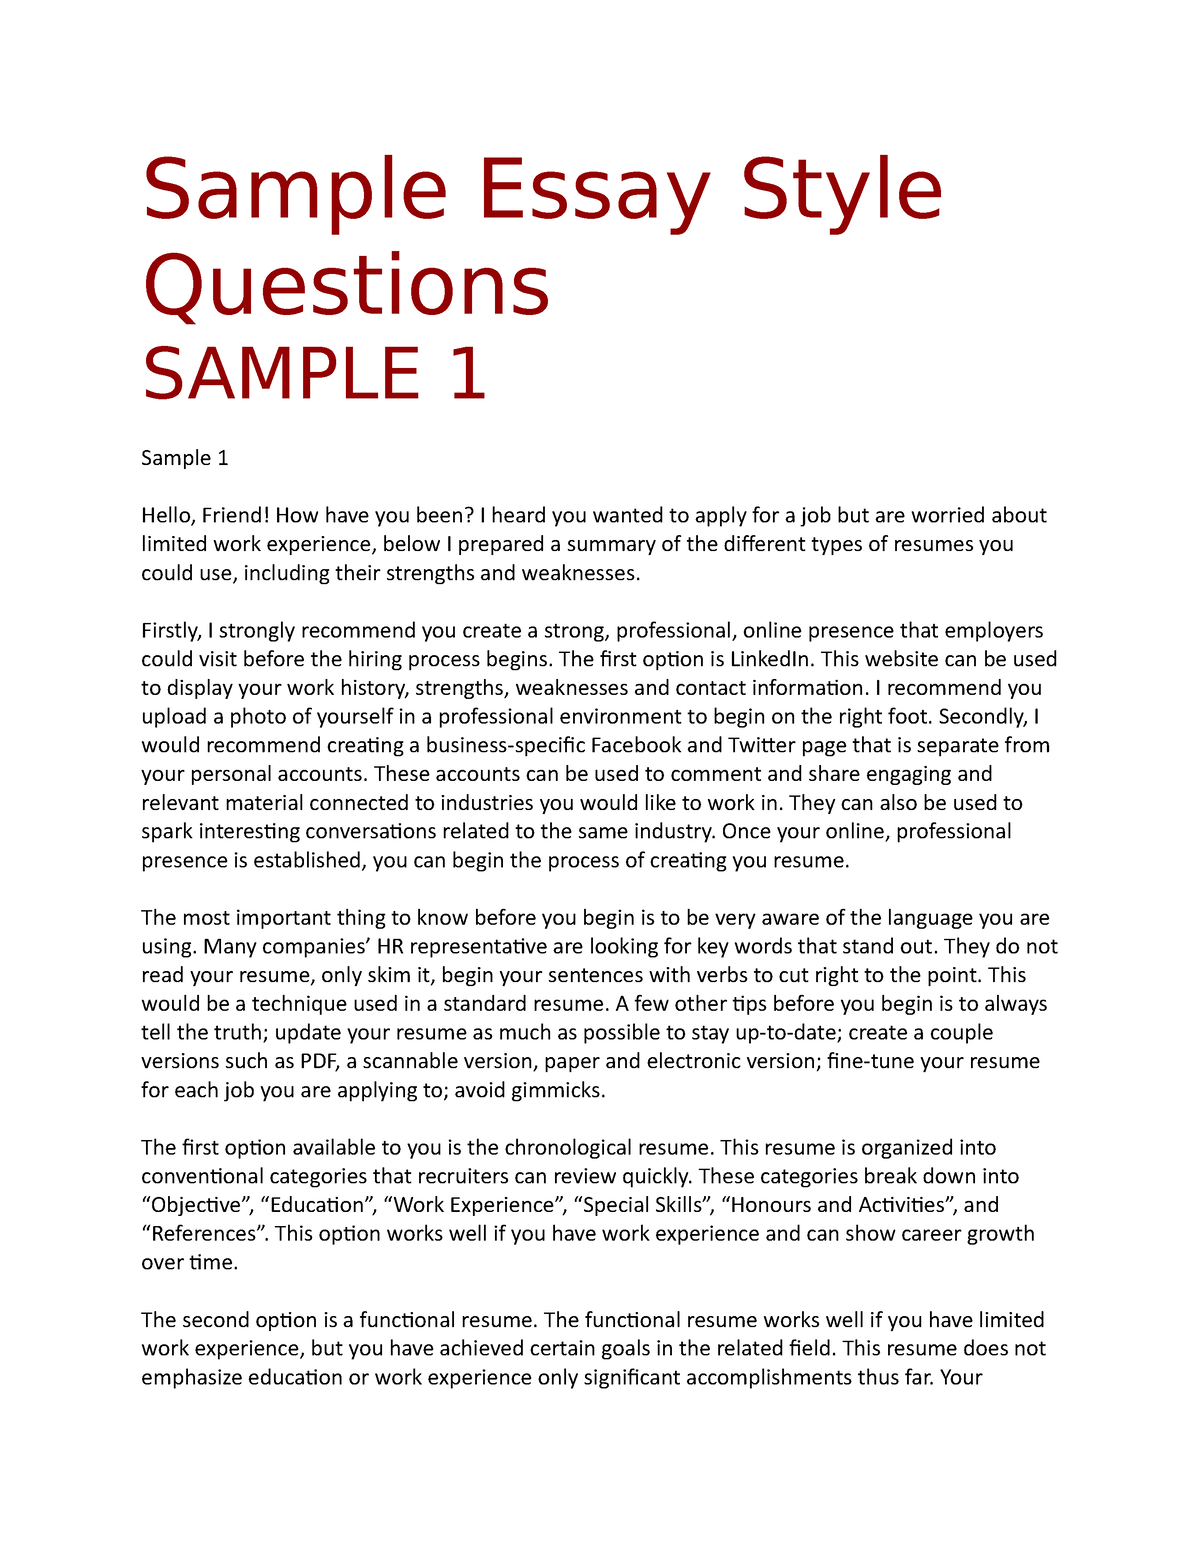 law school exam essay examples